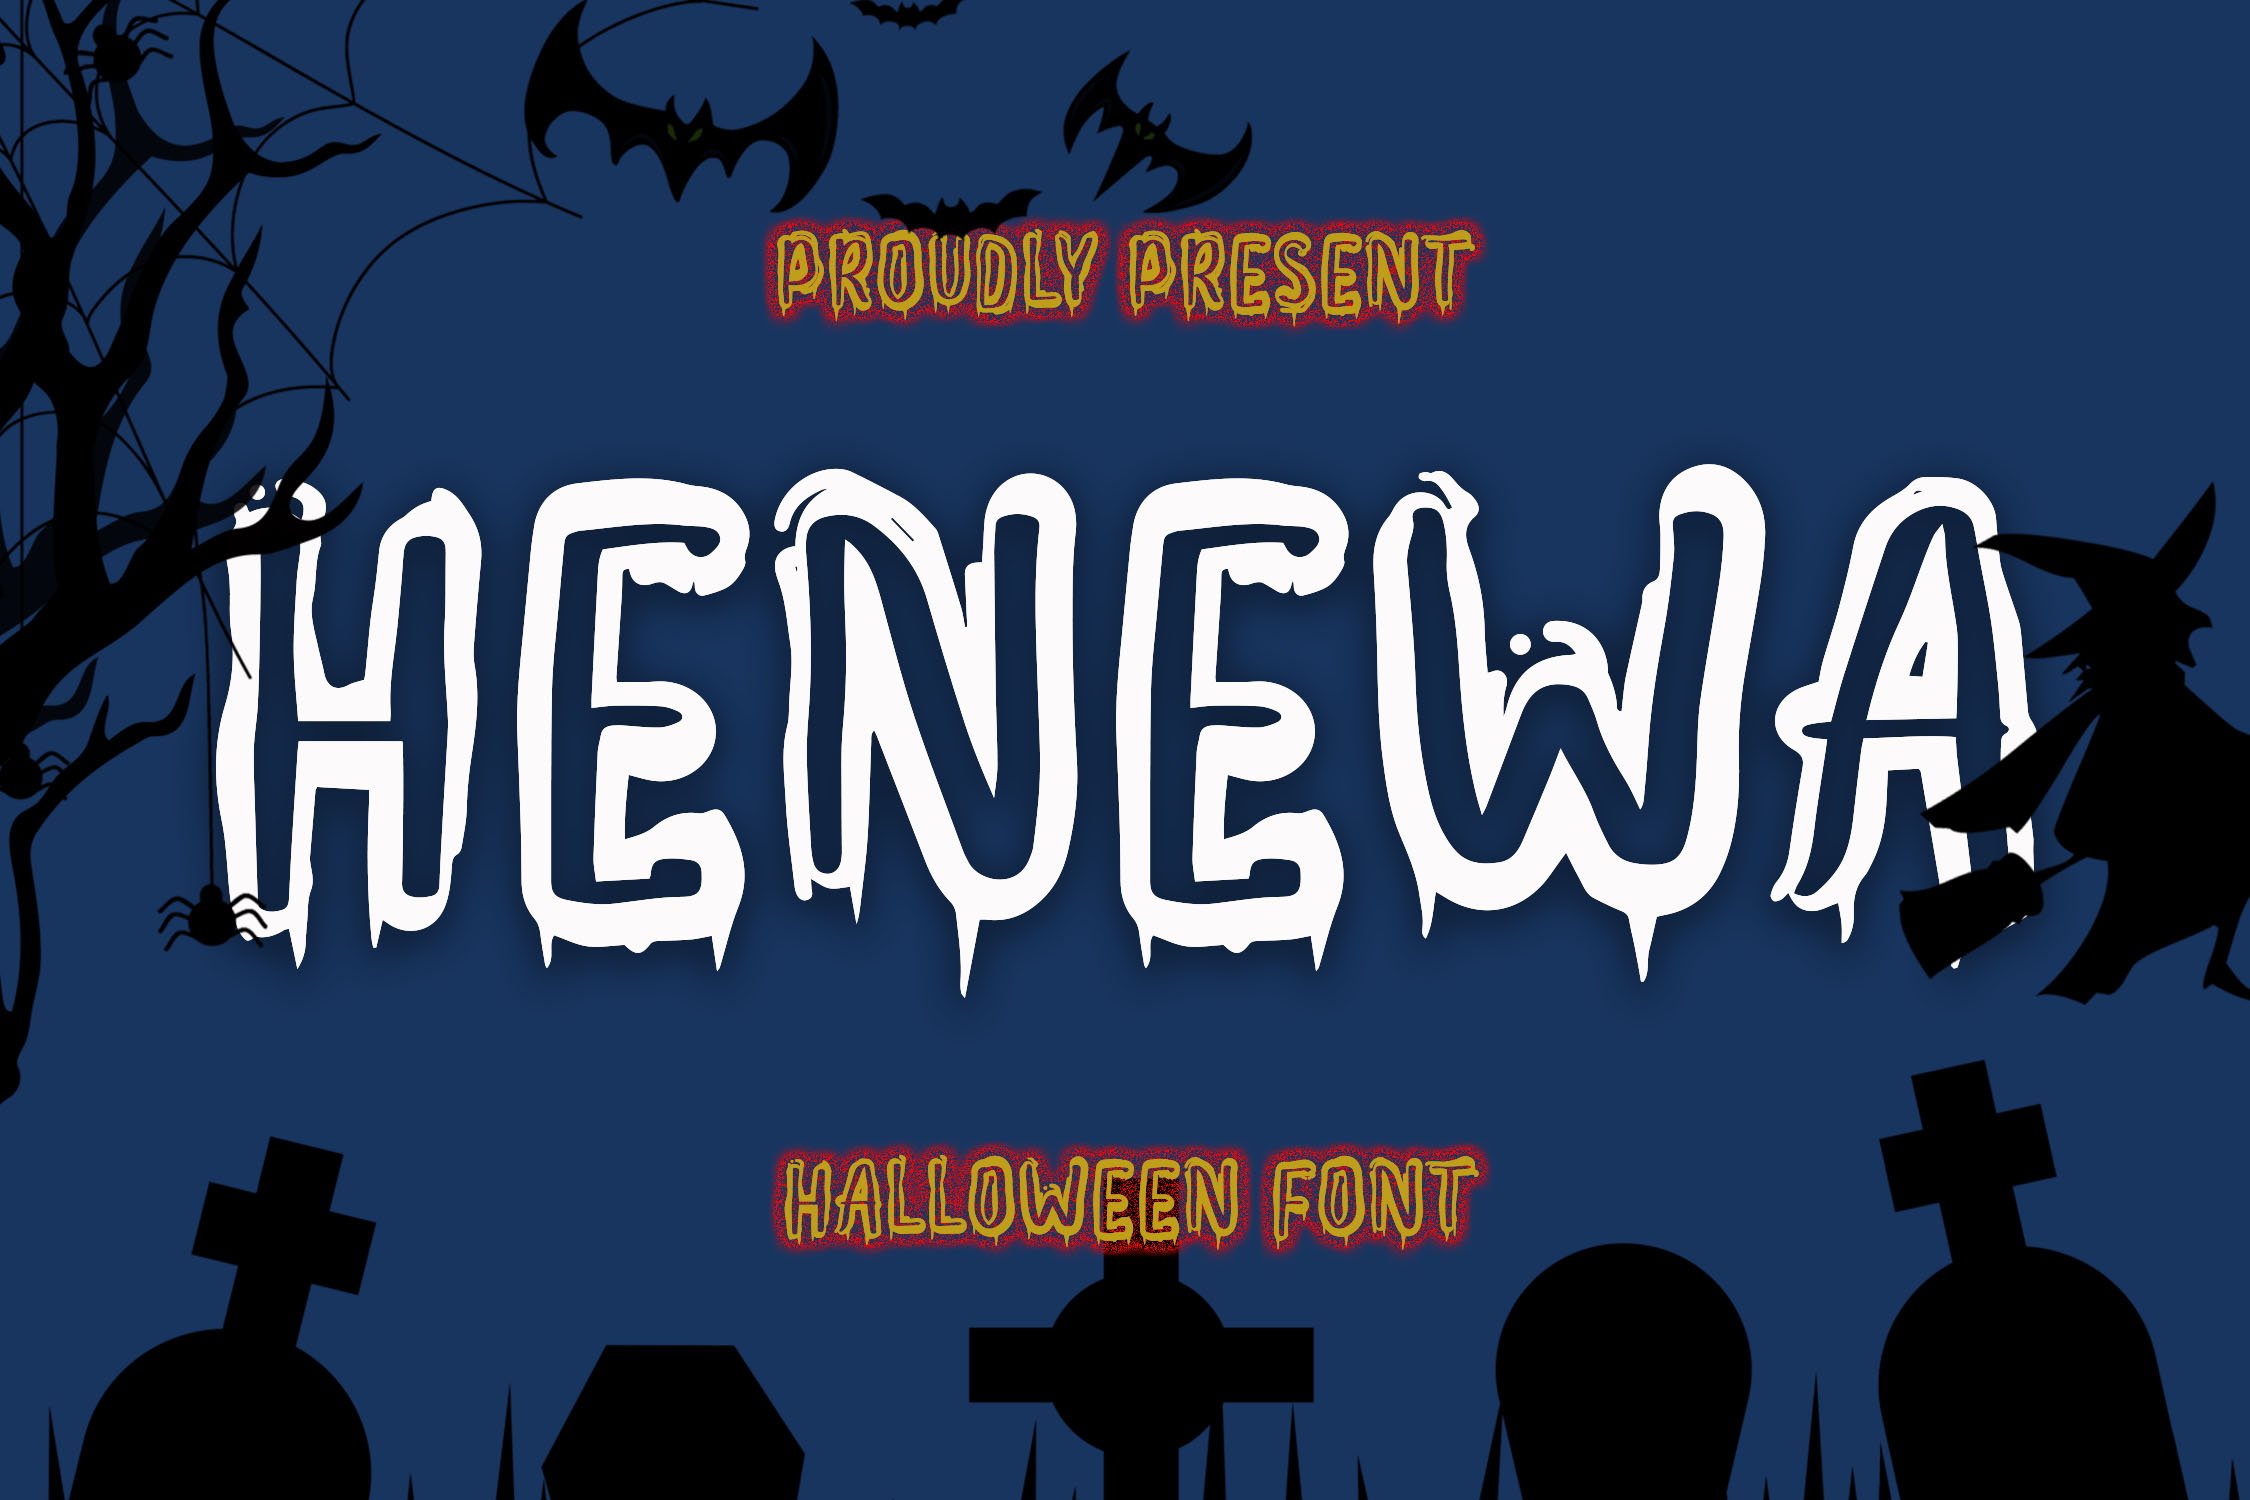 HENEWA - Halloween Font cover image.